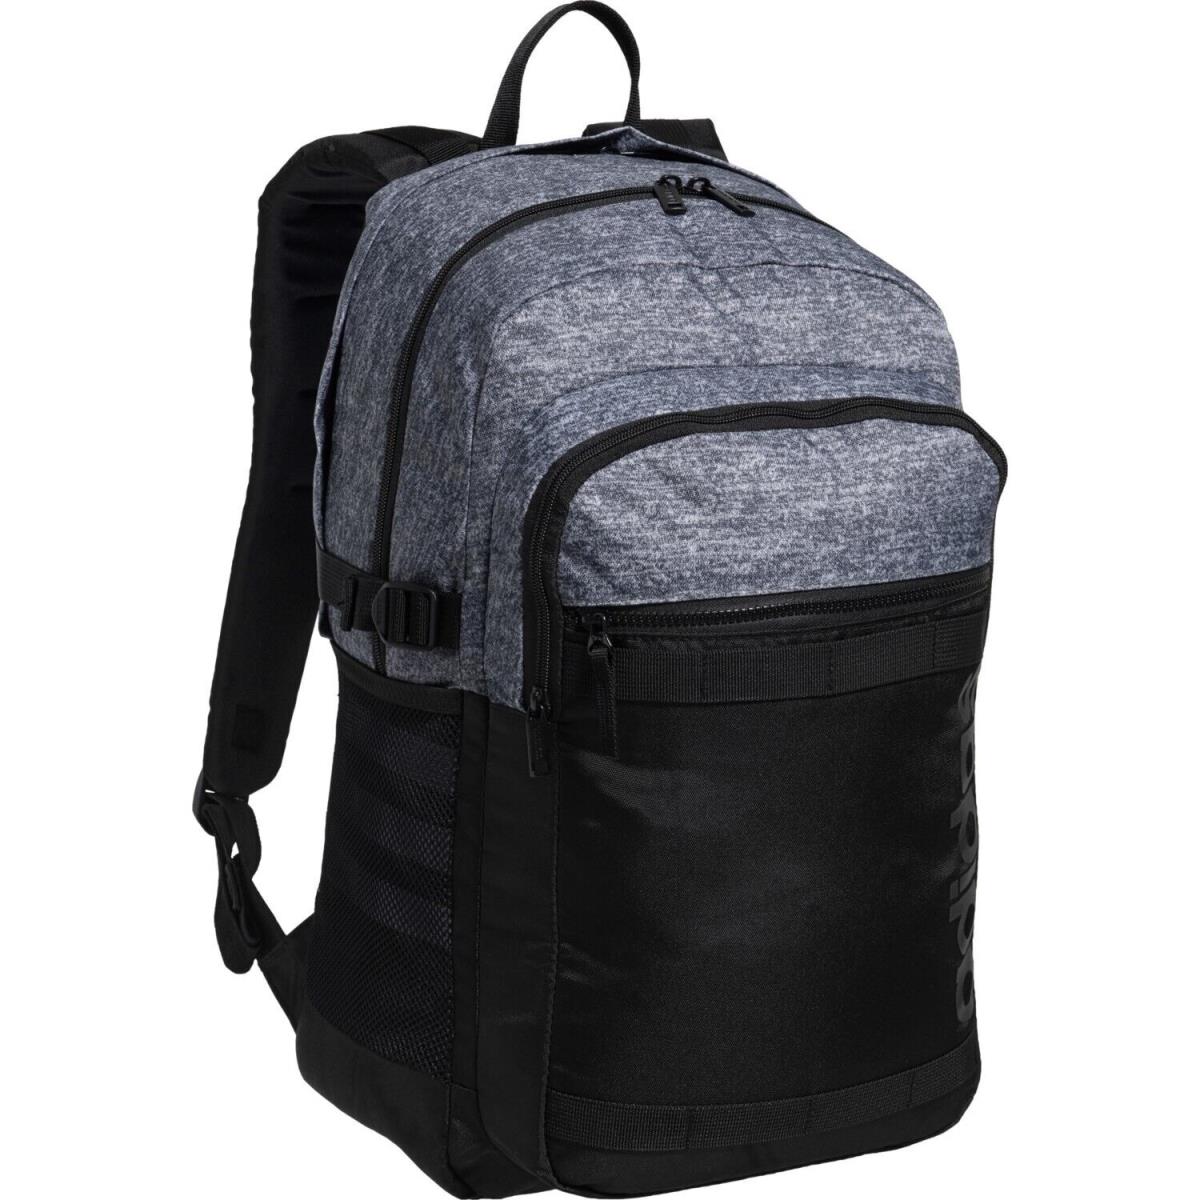 Adidas Core Advantage 3 Black Grey 16 Laptop Backpack 20 OS School Bag